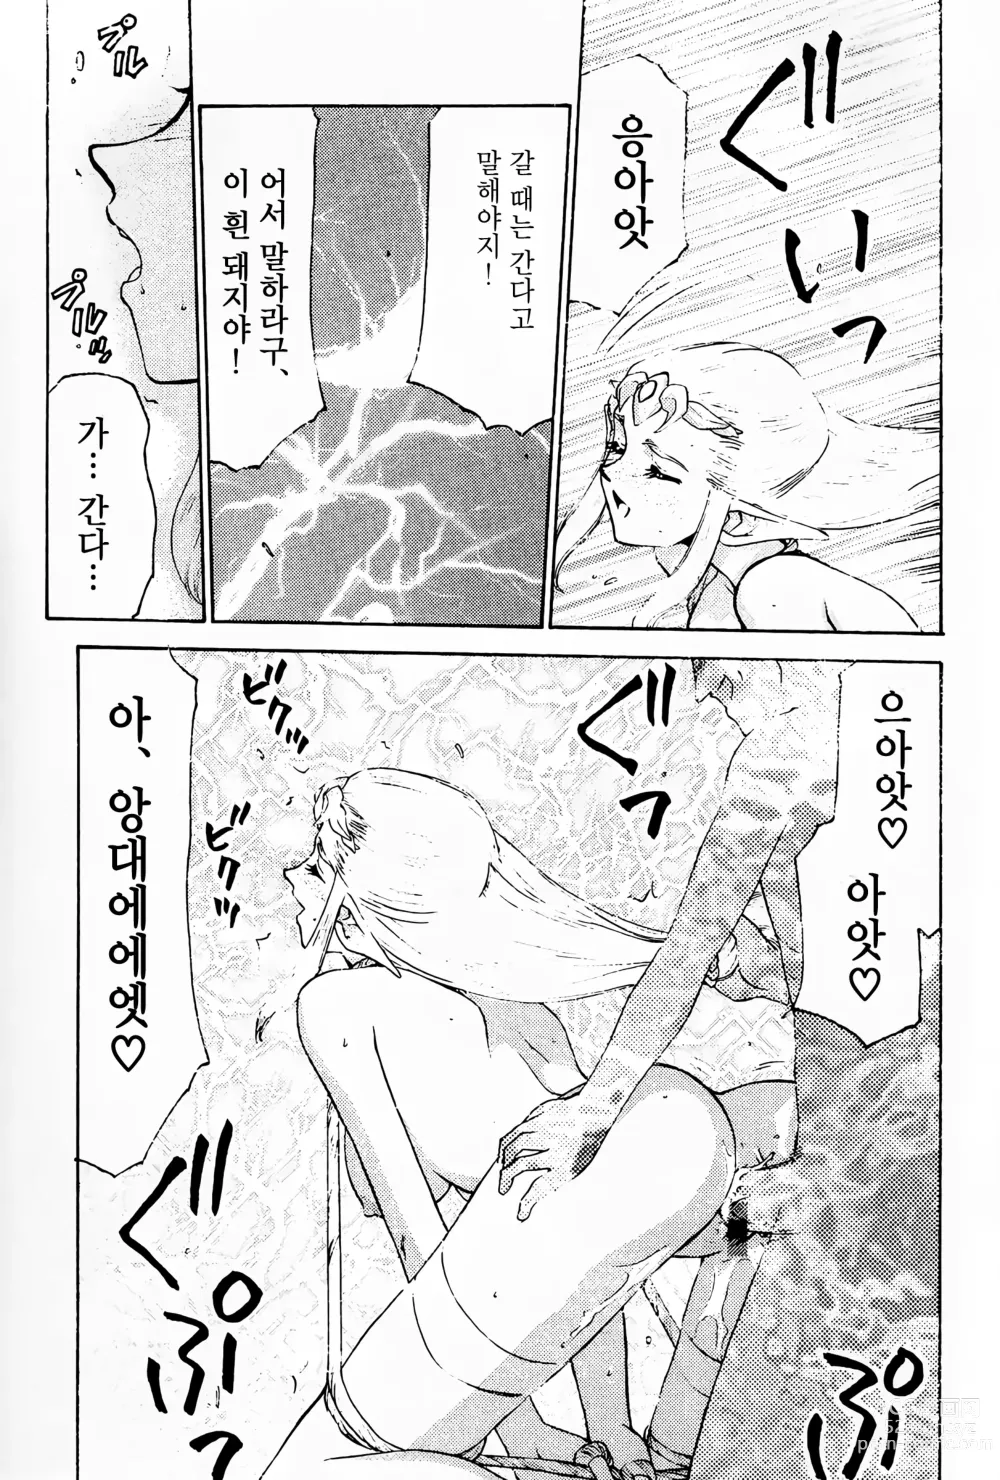 Page 22 of doujinshi NISE Zelda no Densetsu Prologue